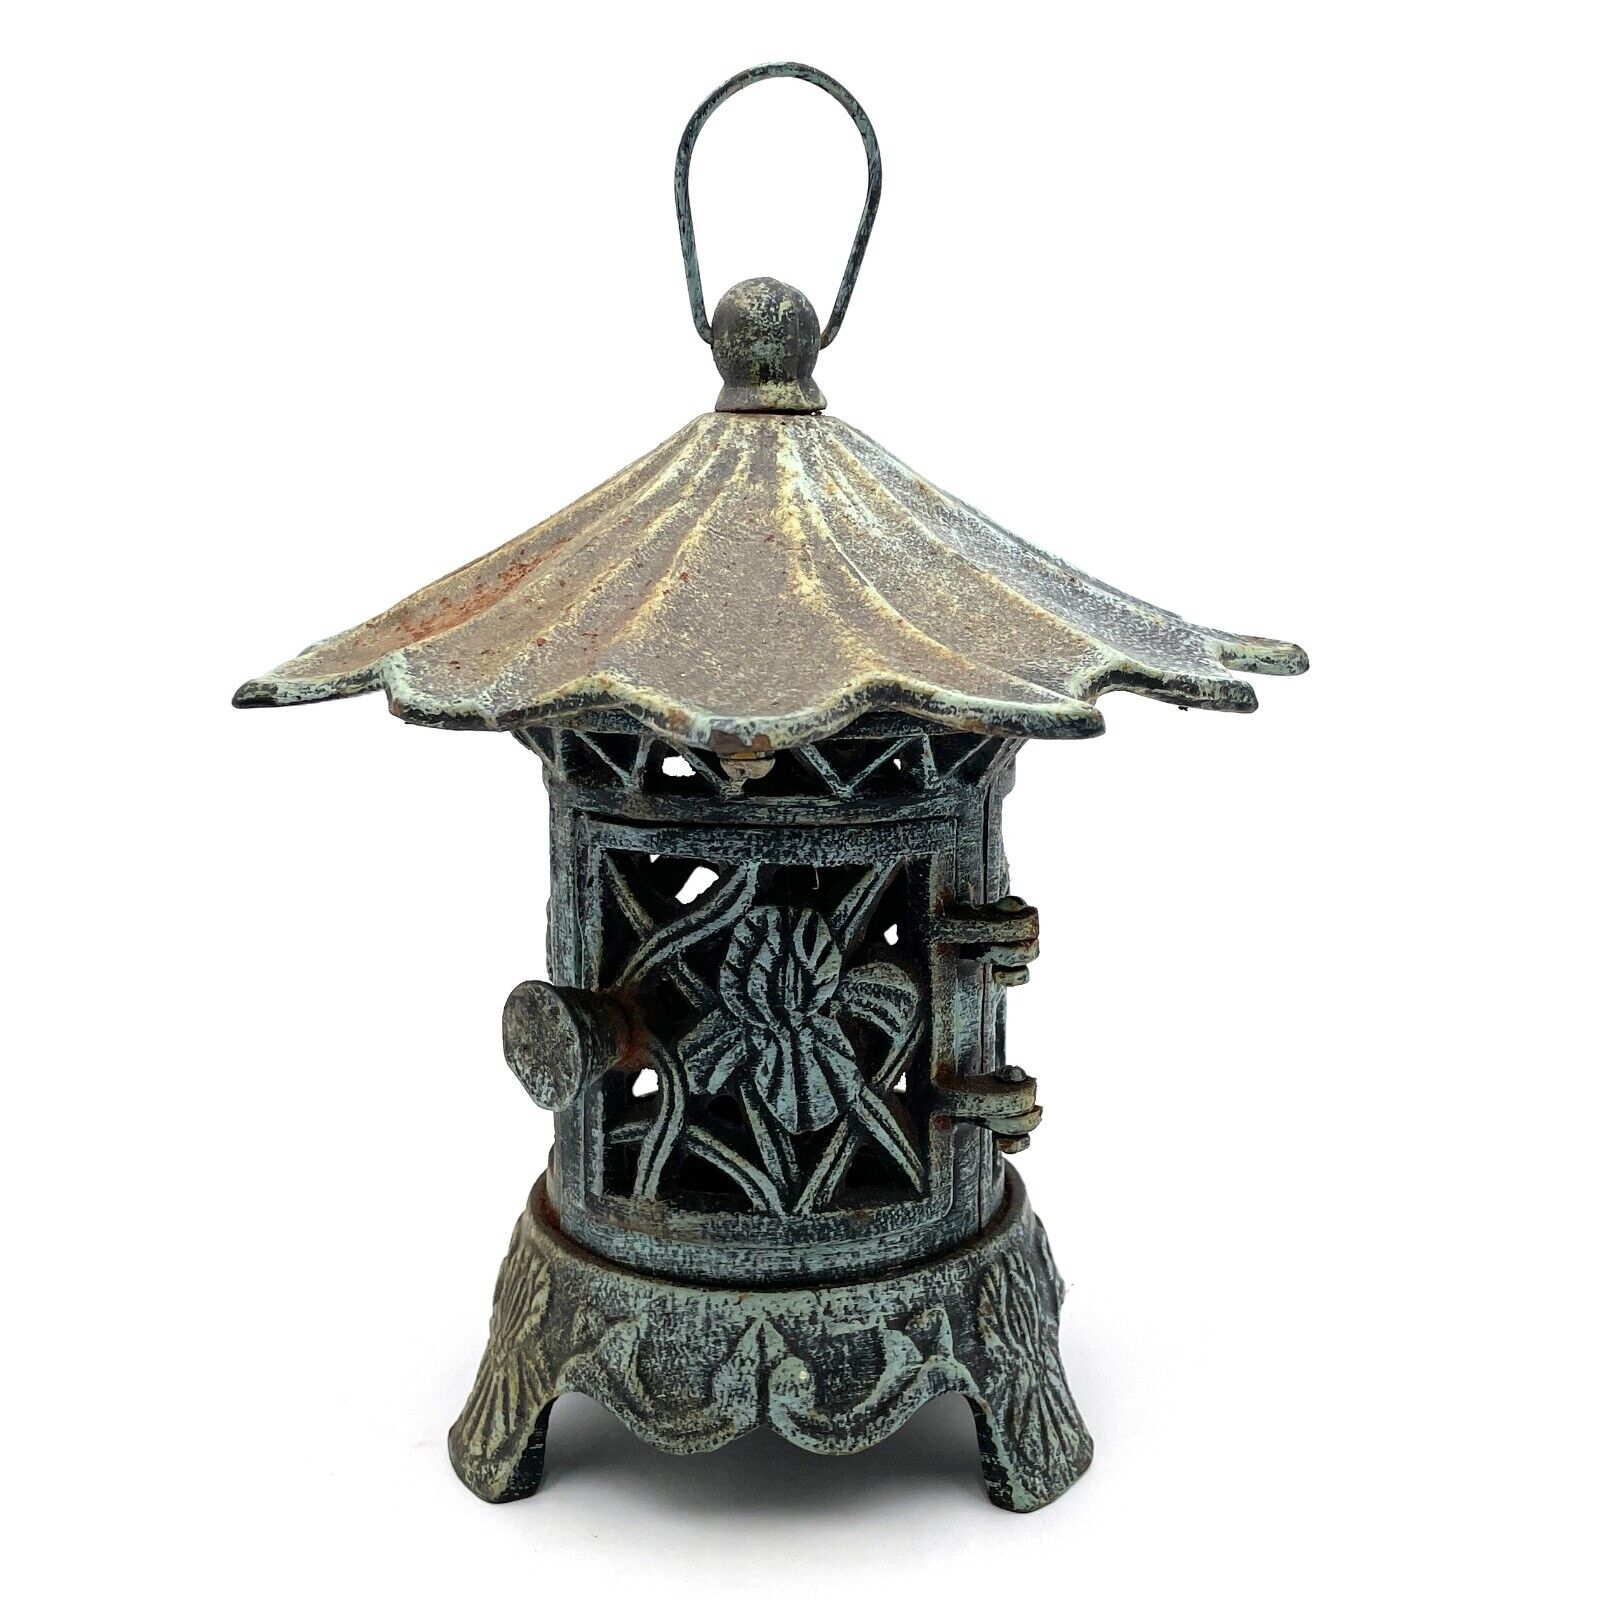 VTG Cast Iron Japanese Hanging Pagoda Garden Lantern Iris Floral Roof Design 8lb